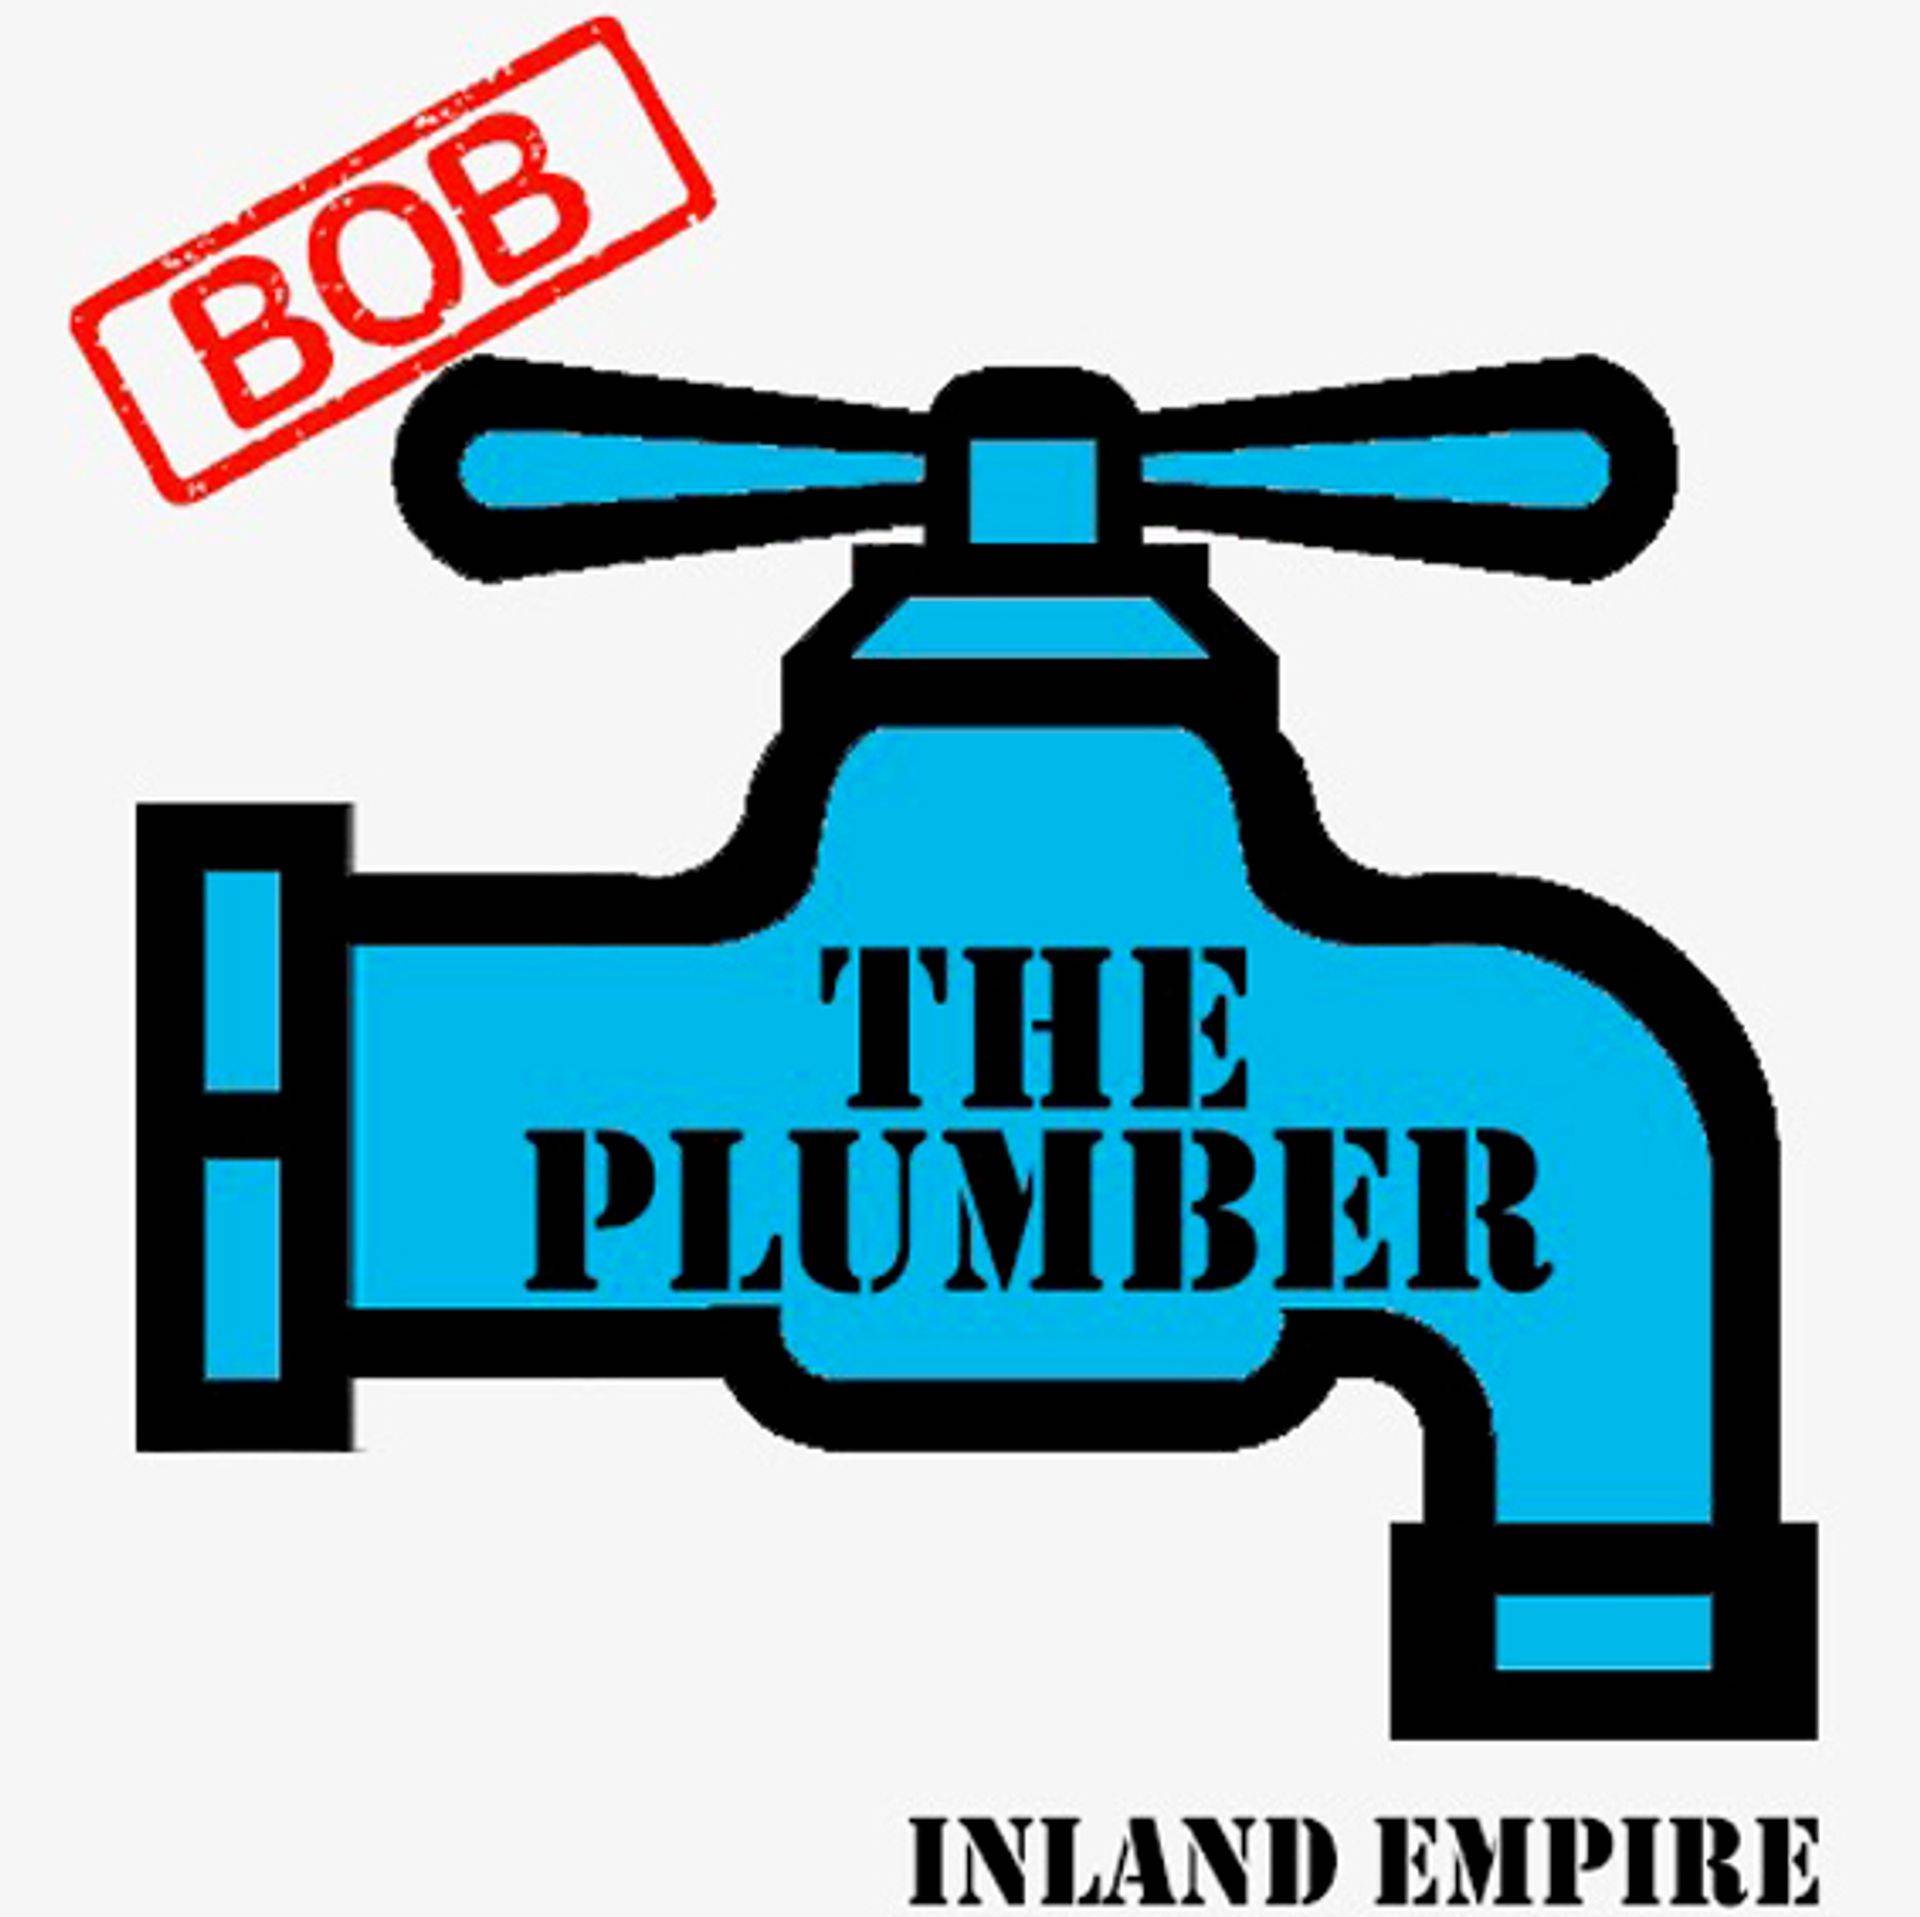 Bob The Plumber Inc.